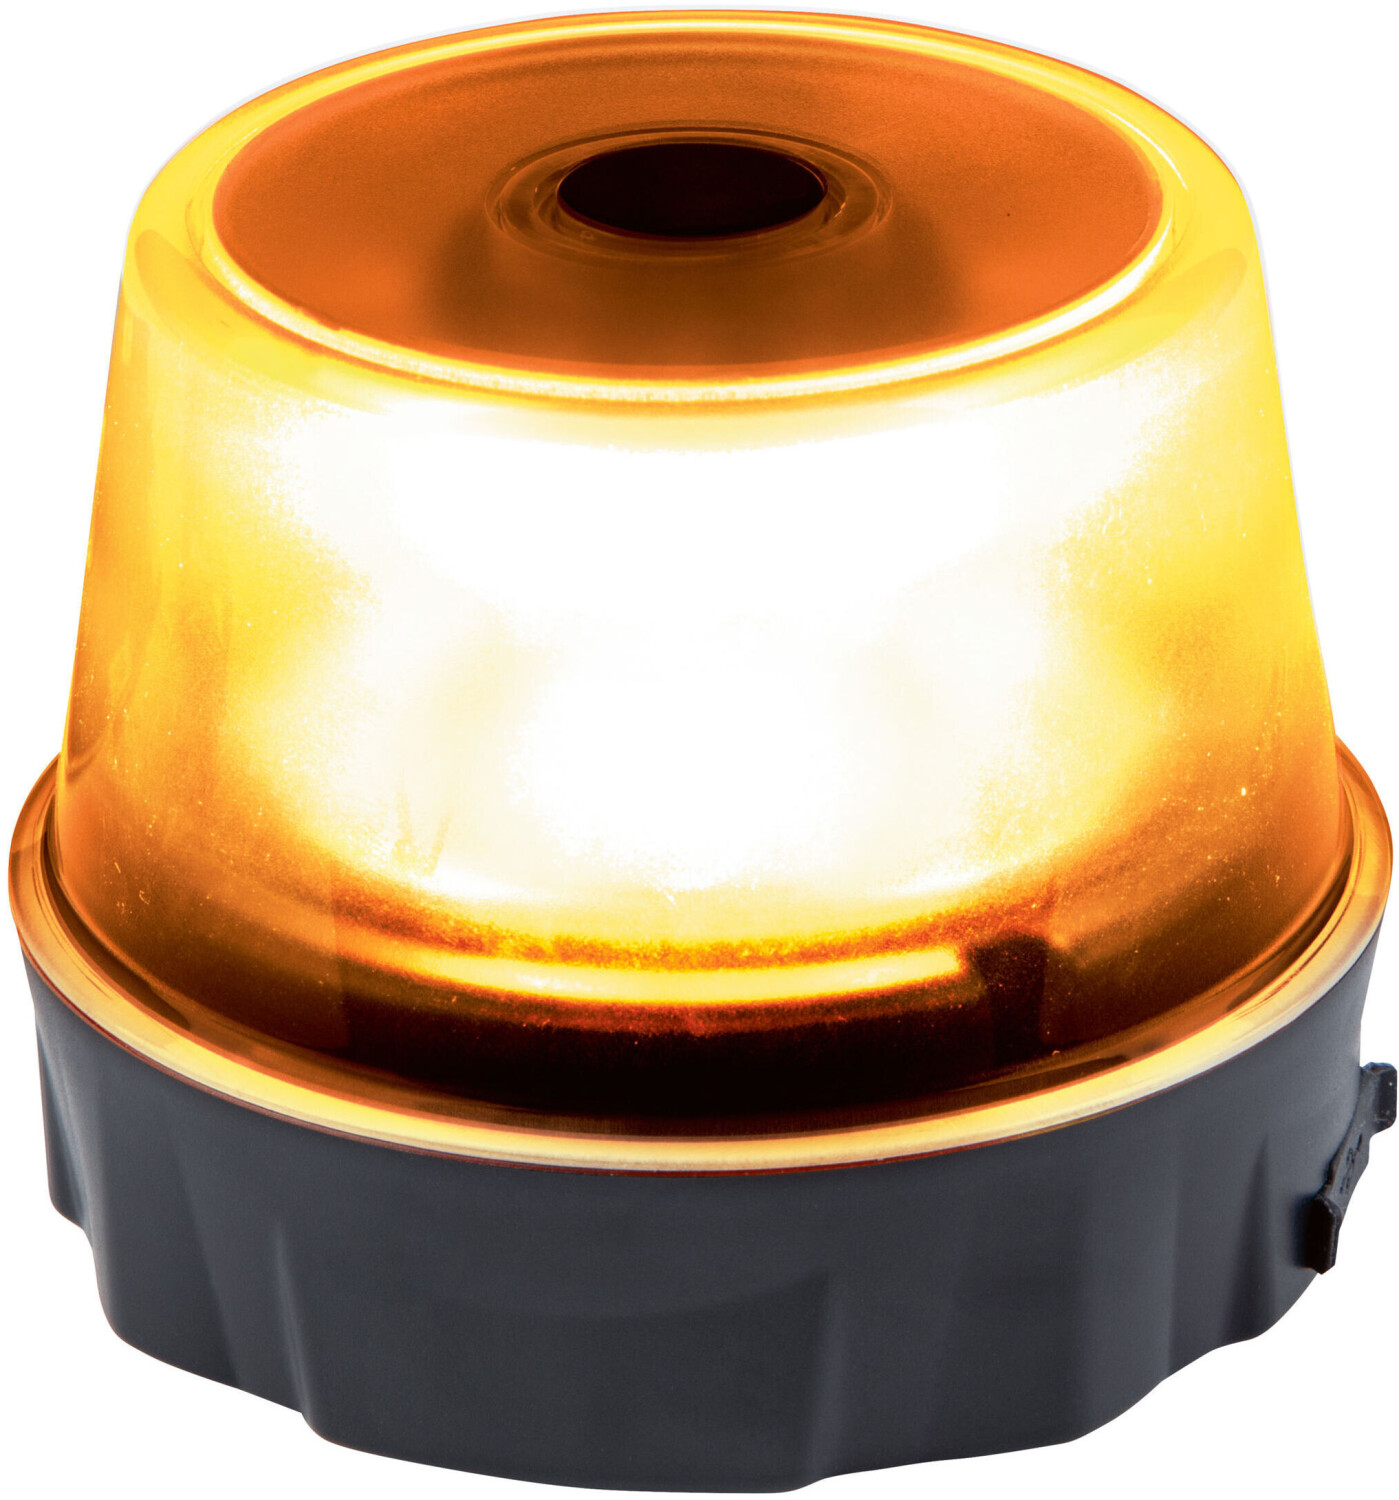 OSRAM LEDguardian® ROAD FLARE Signal TA20 LED Warnlicht Orange - LEDSL104